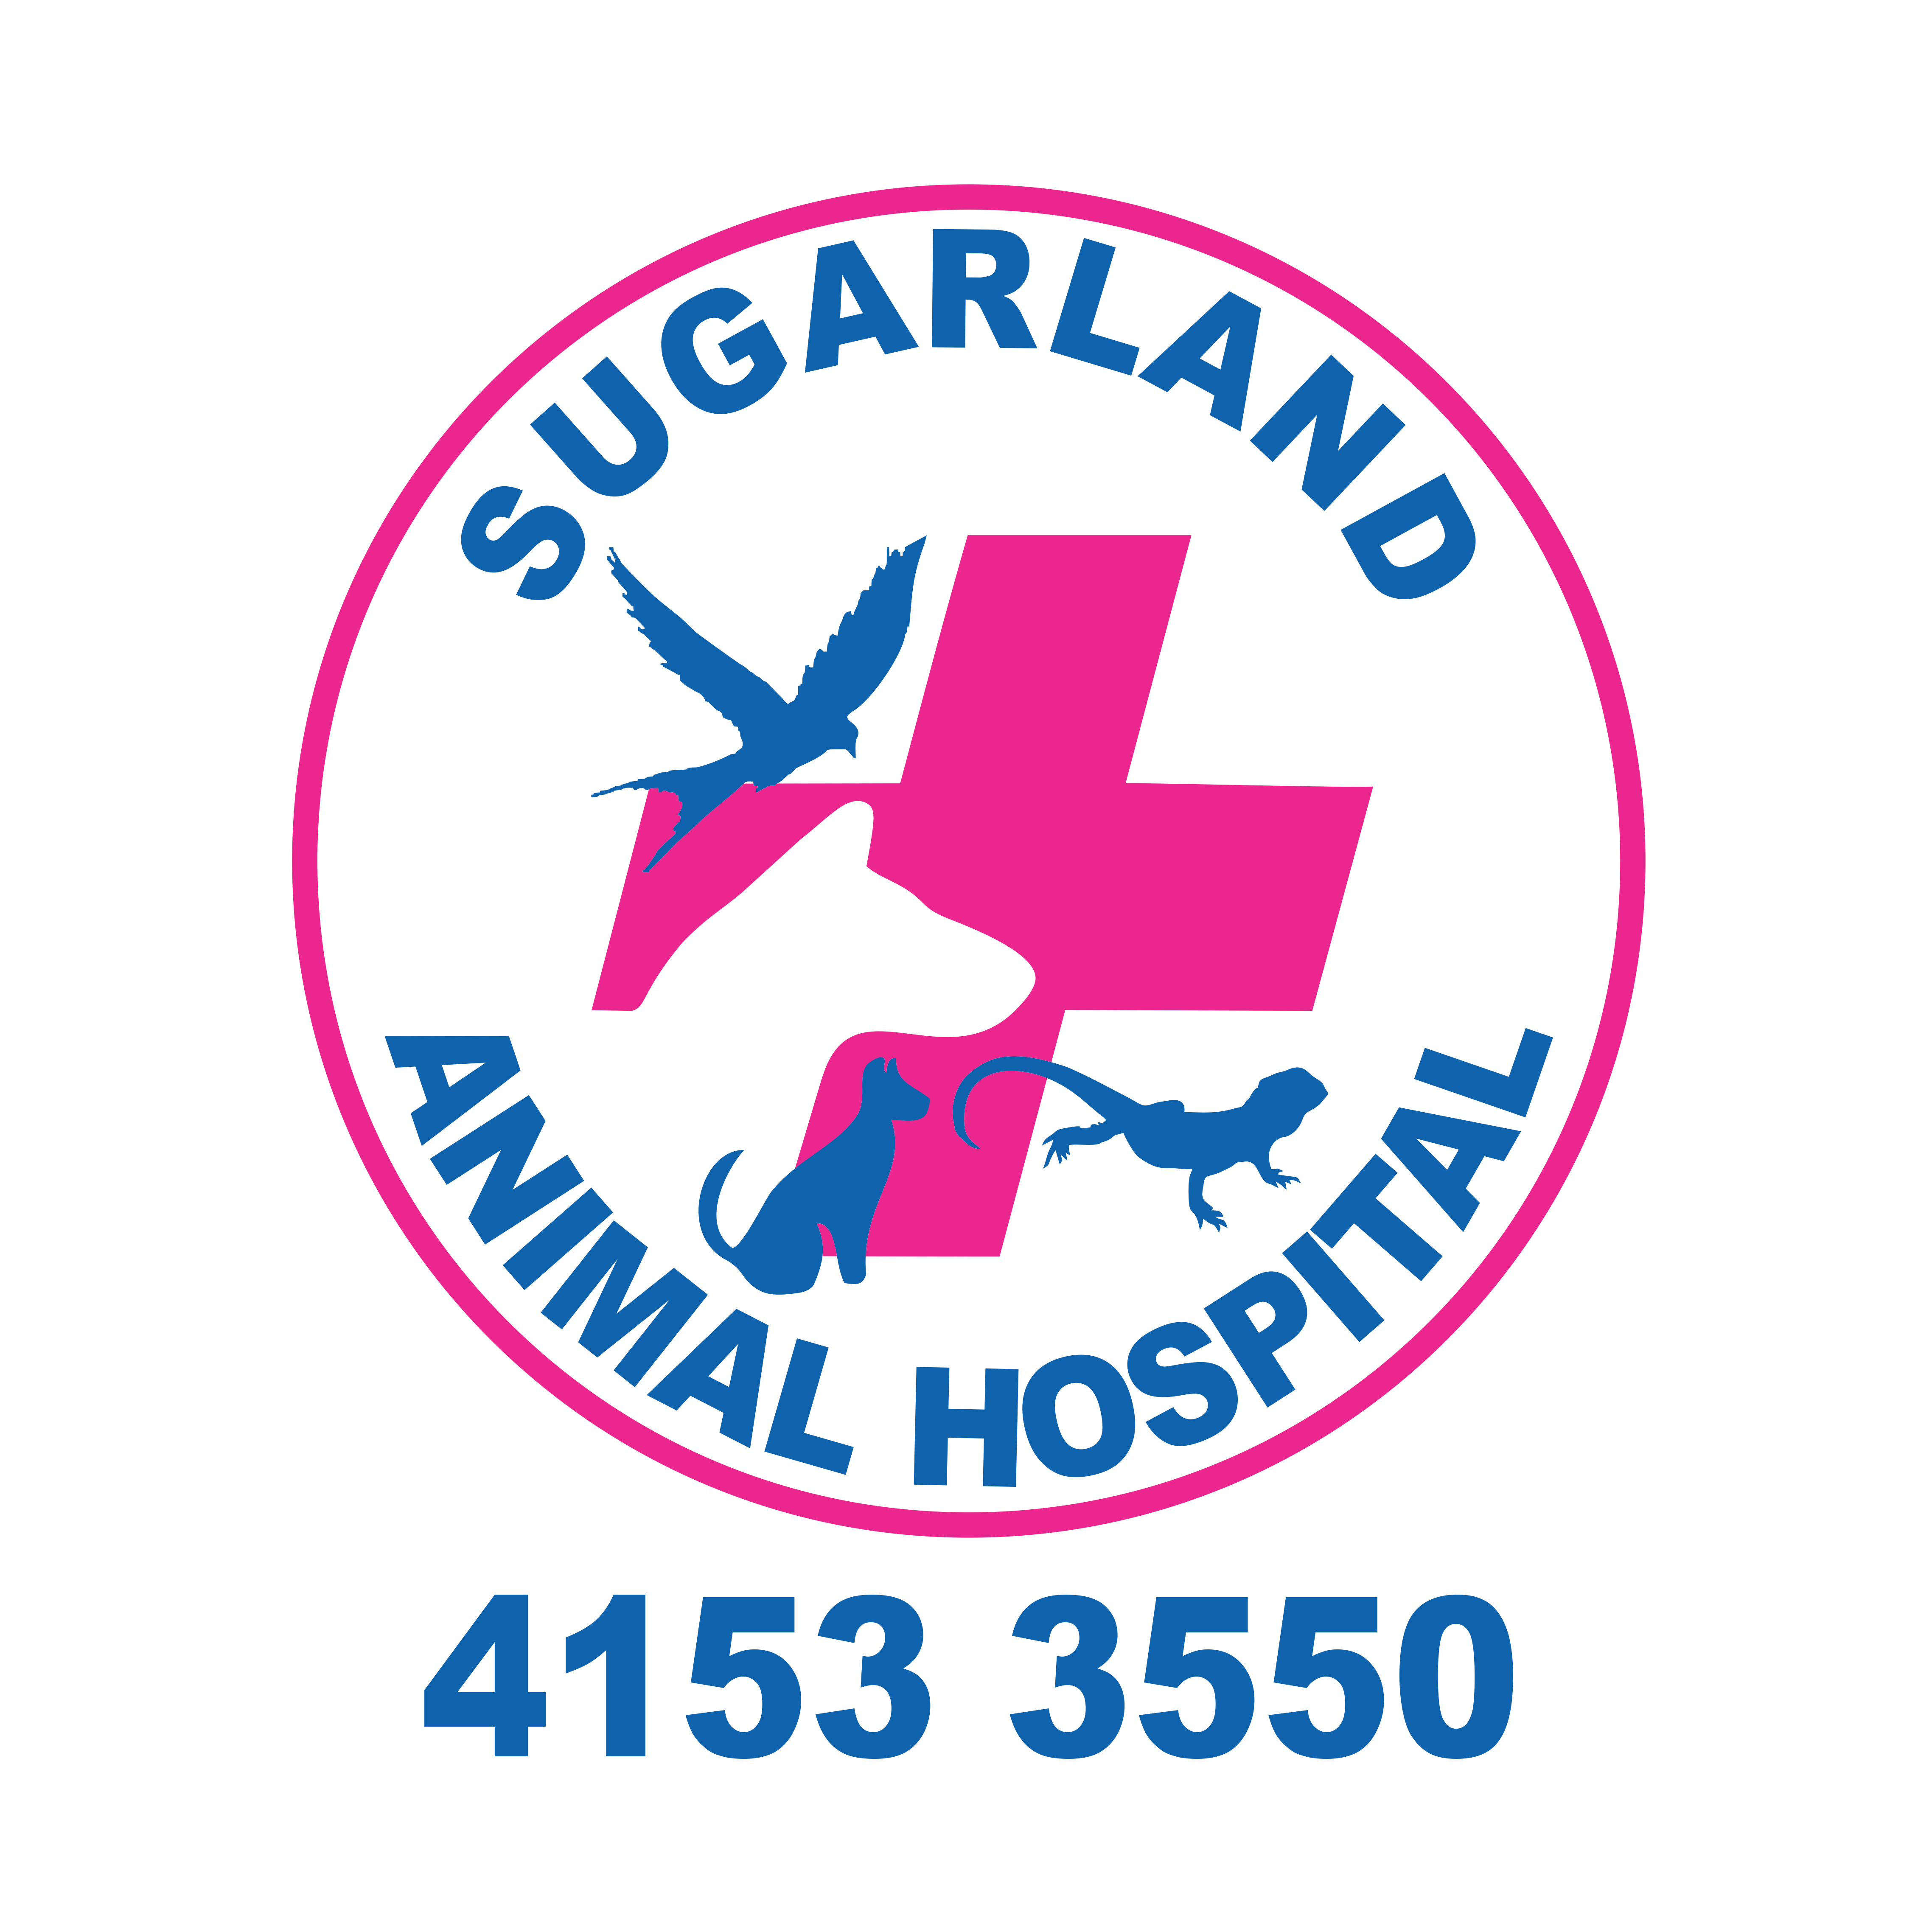 Sugarland Animal Hospital Logo